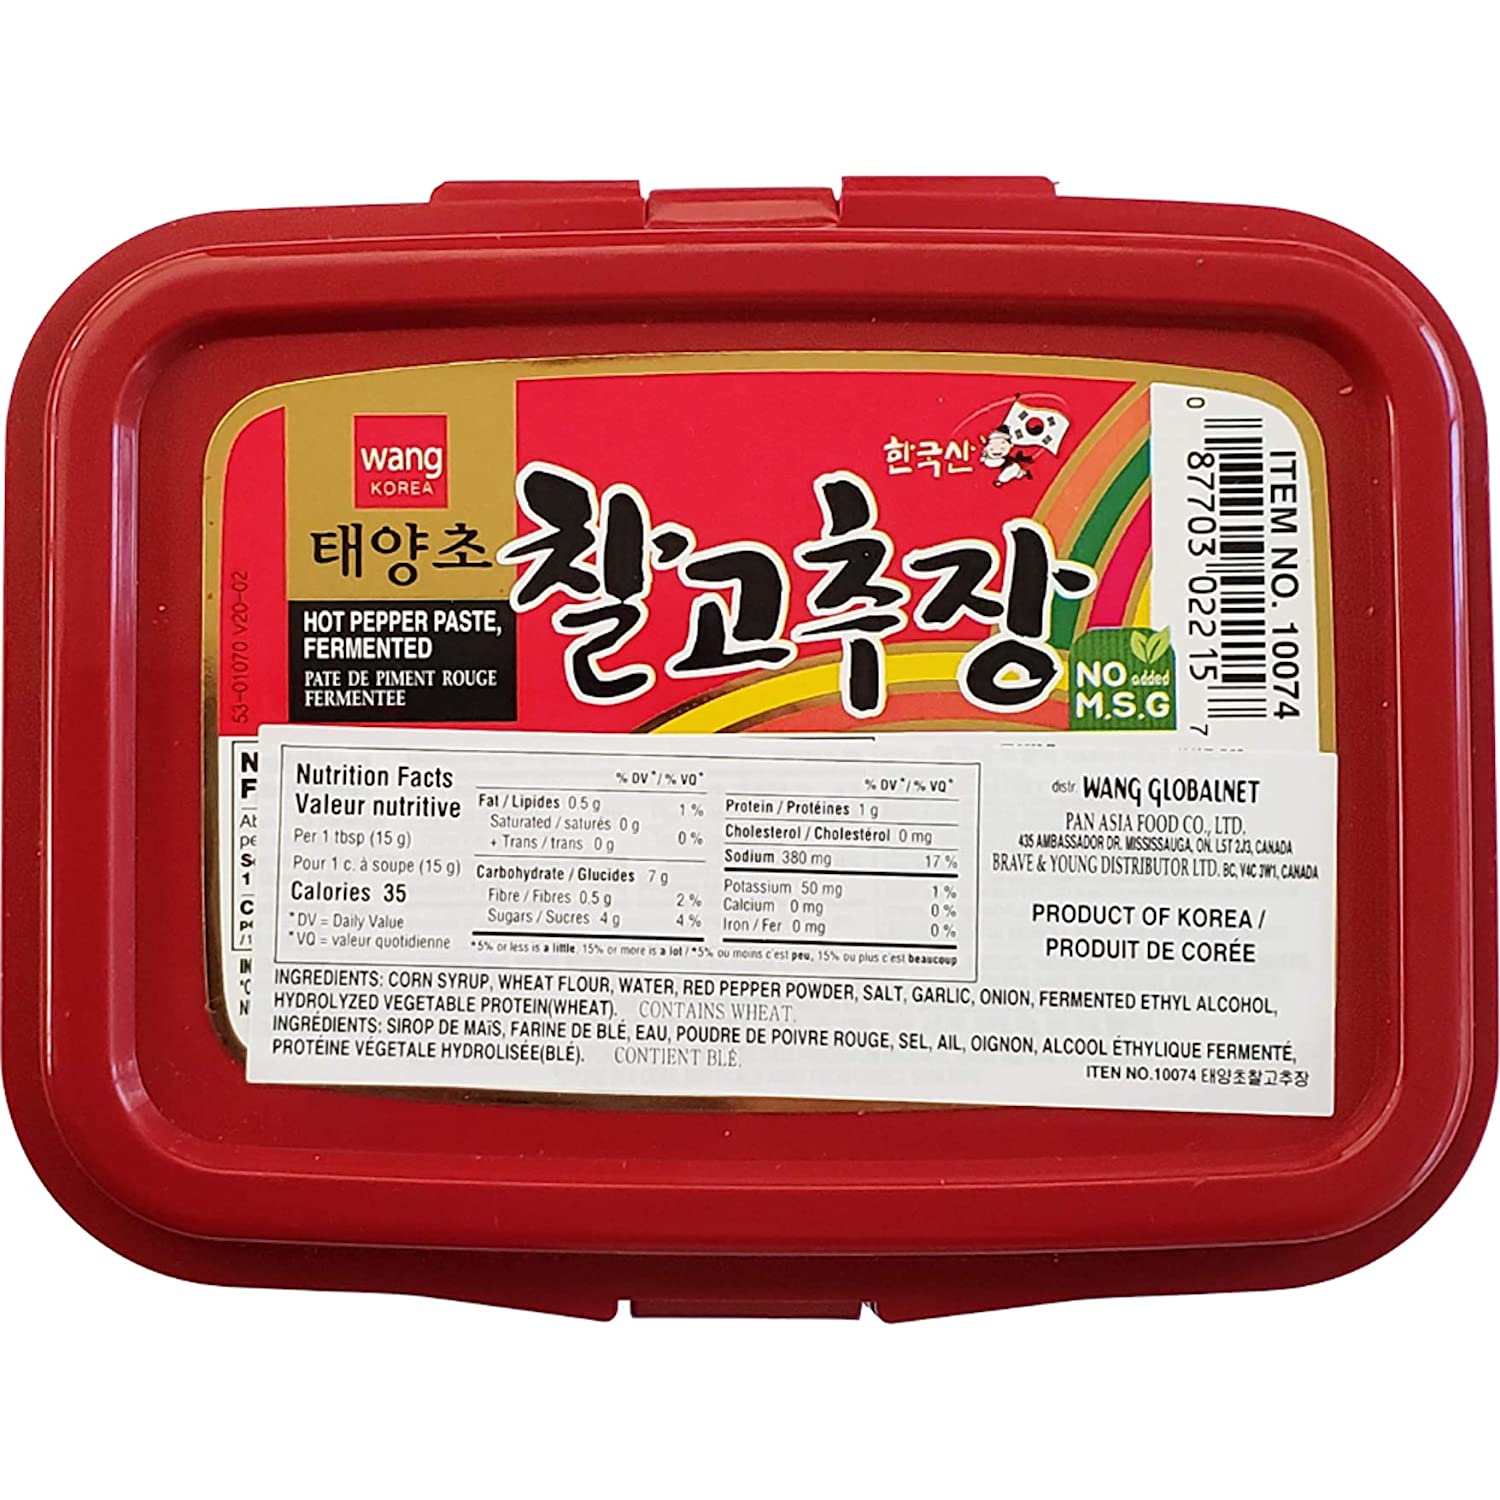 Wang Korea Hot Pepper Paste, Fermented - 500g/17.6oz - 0